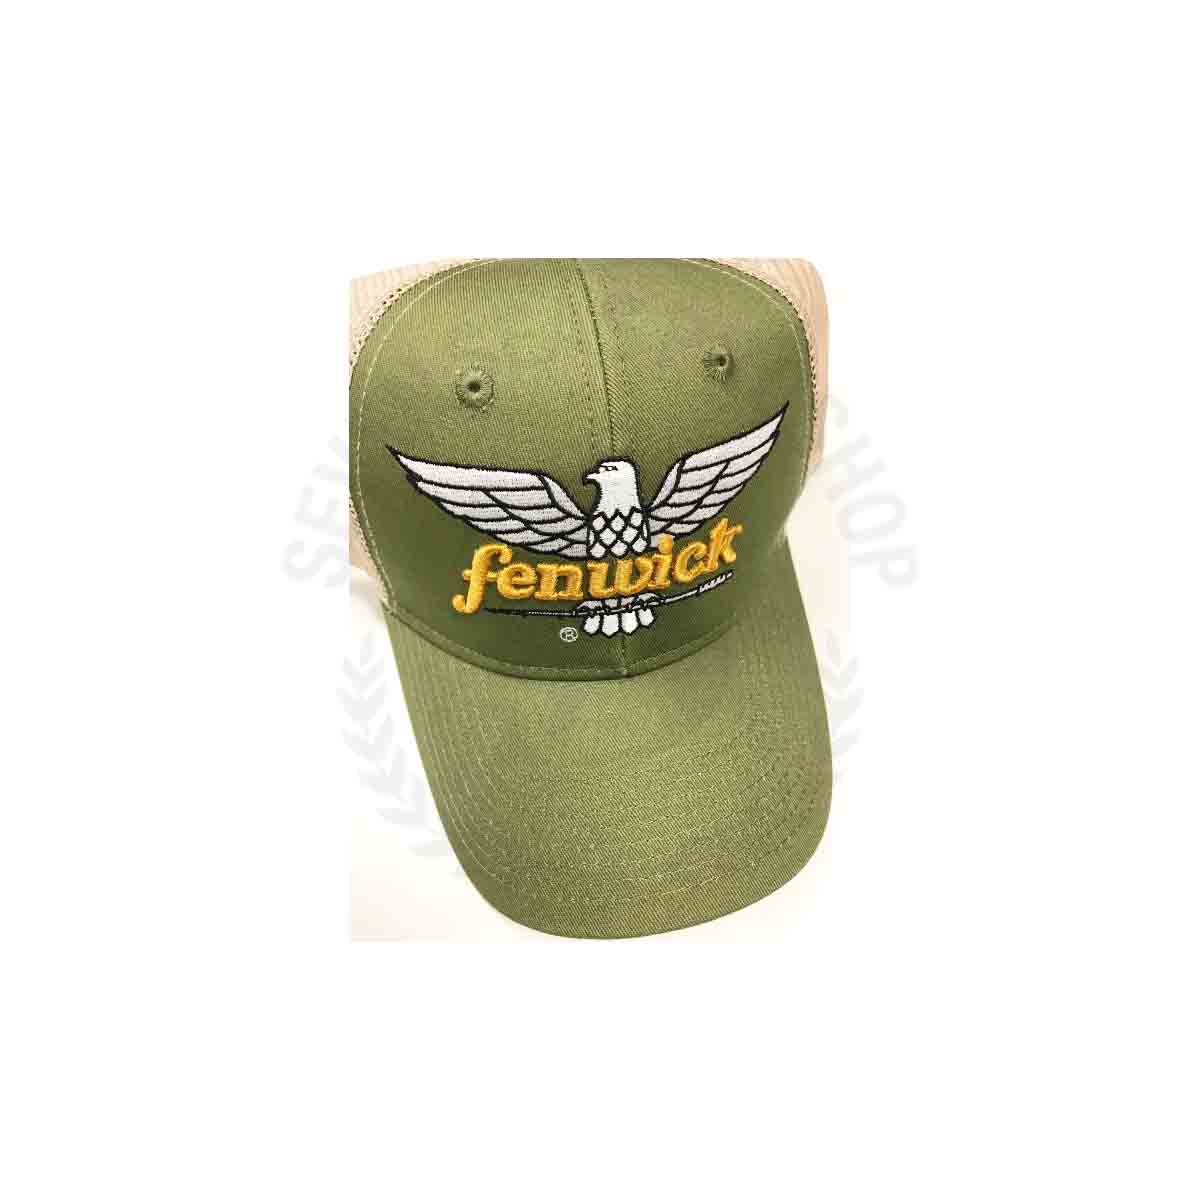 Fenwick Trucker Mesh หมวก เขียวมะกอก - 7 SEAS PROSHOP (THAILAND)